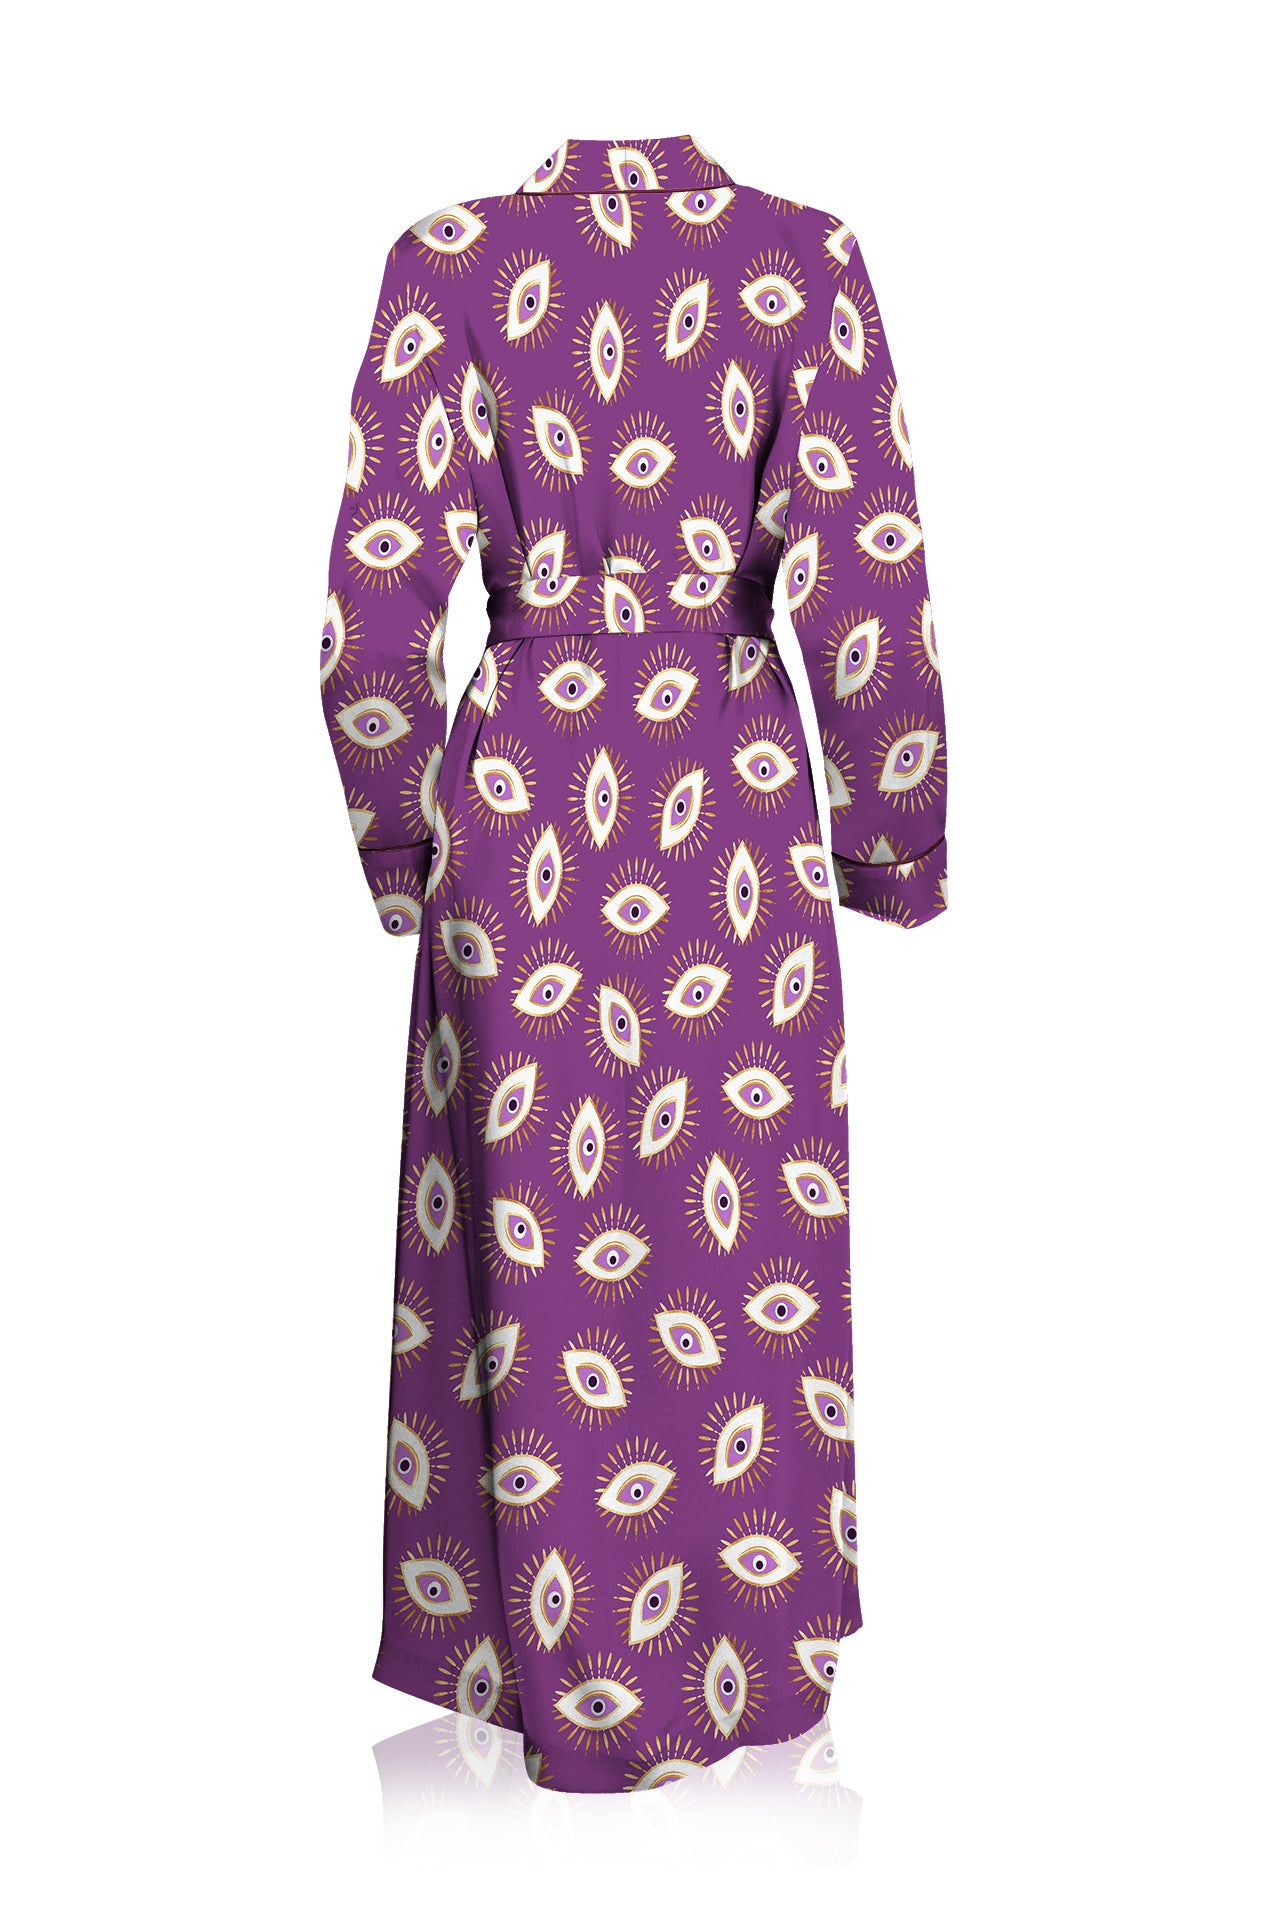 "womens long kimono robe" "kimonos for women" "kim ono silk robe" "Kyle X Shahida"